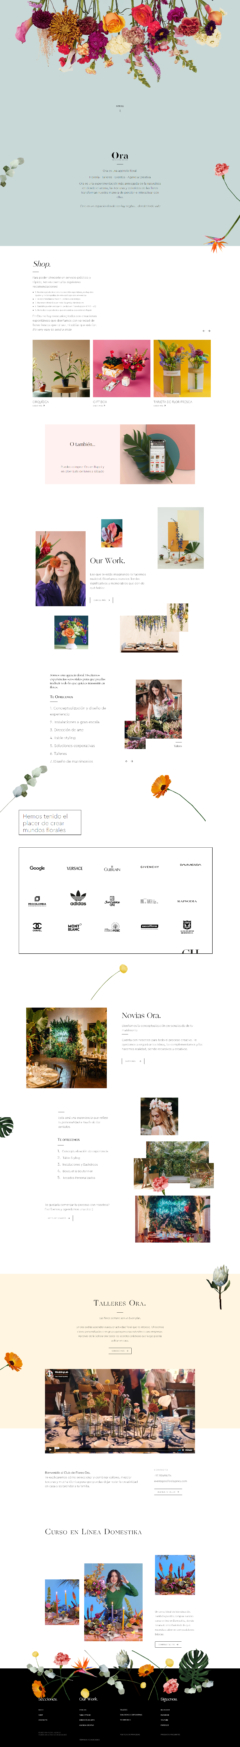 Ora the floral agency e-commerce fullscreen